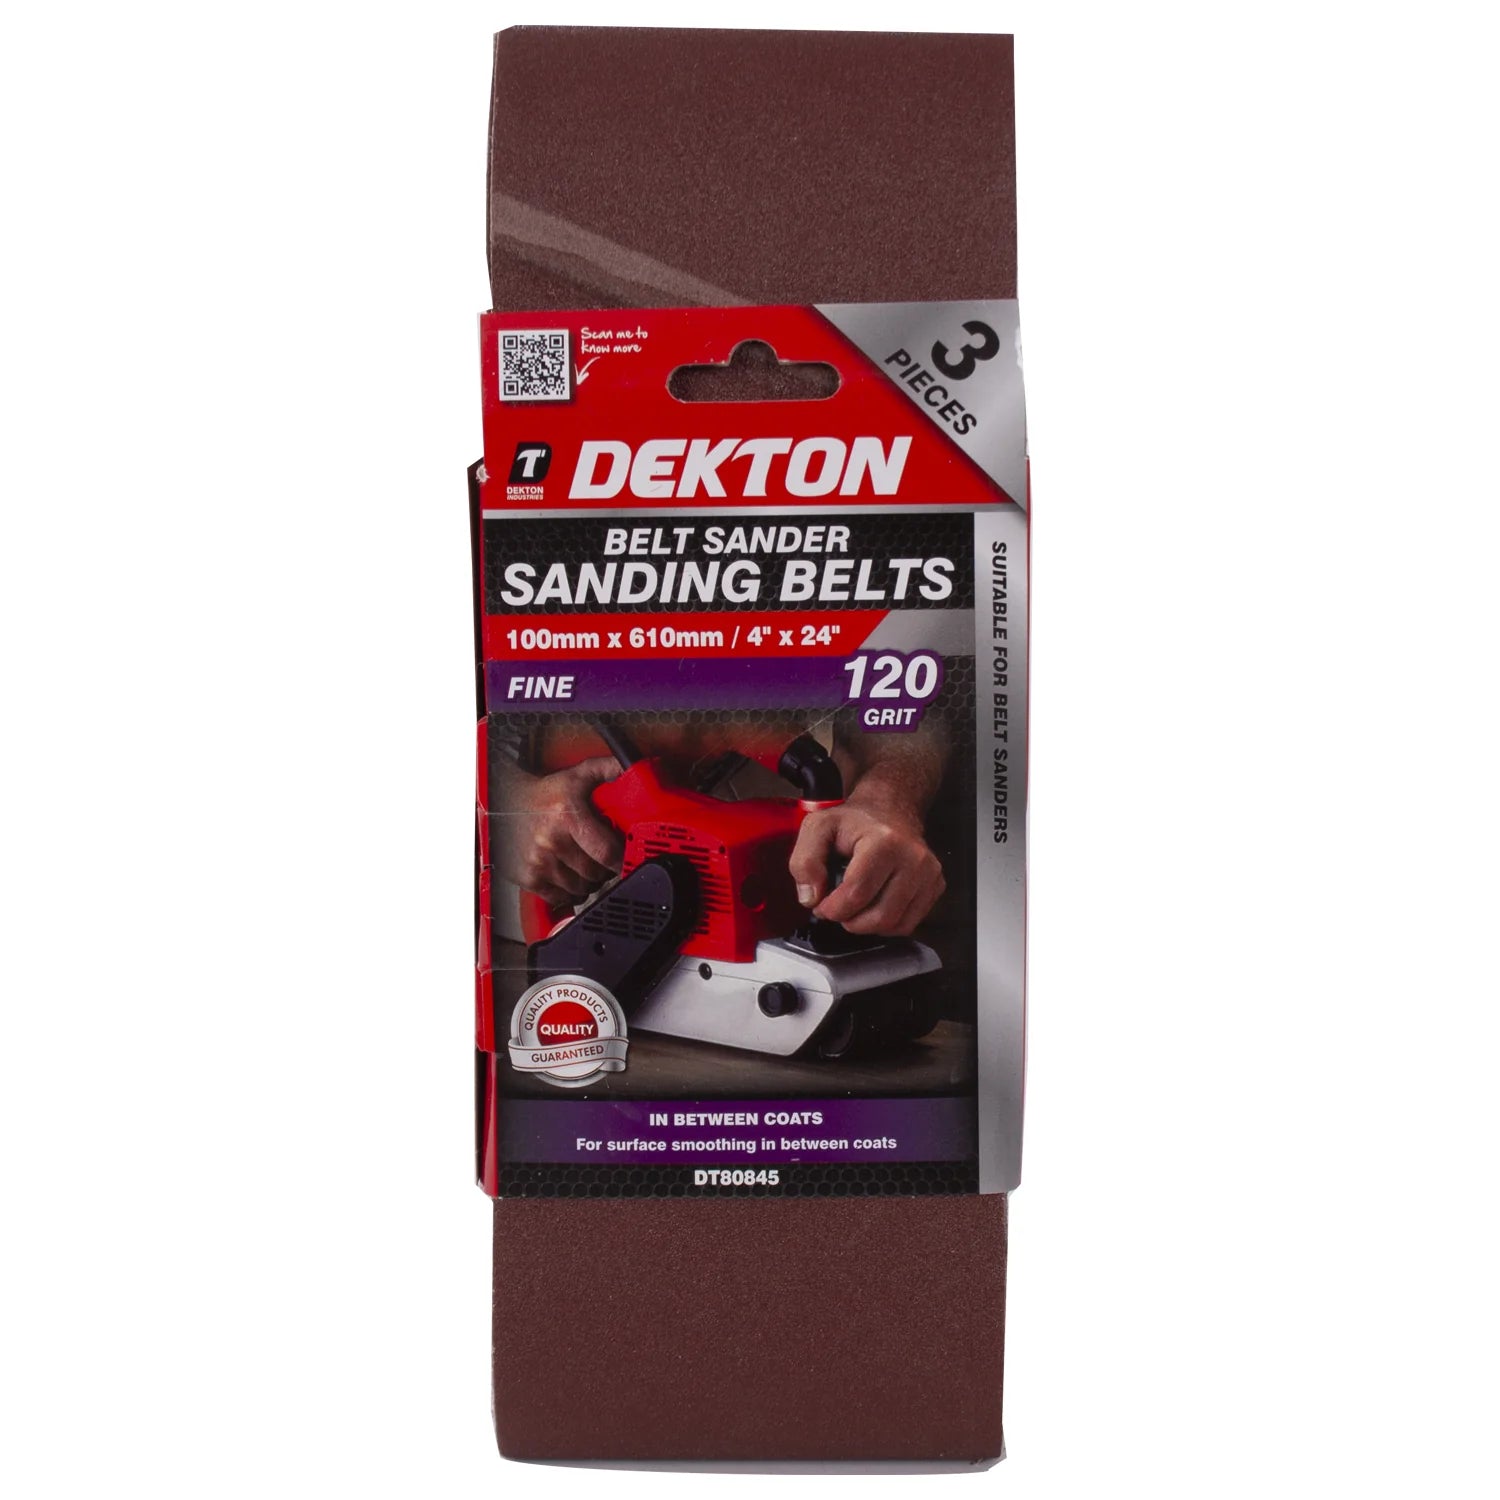 Dekton Belt Sander Sanding Belts 120 Grit 100 x 610mm Pack of 3